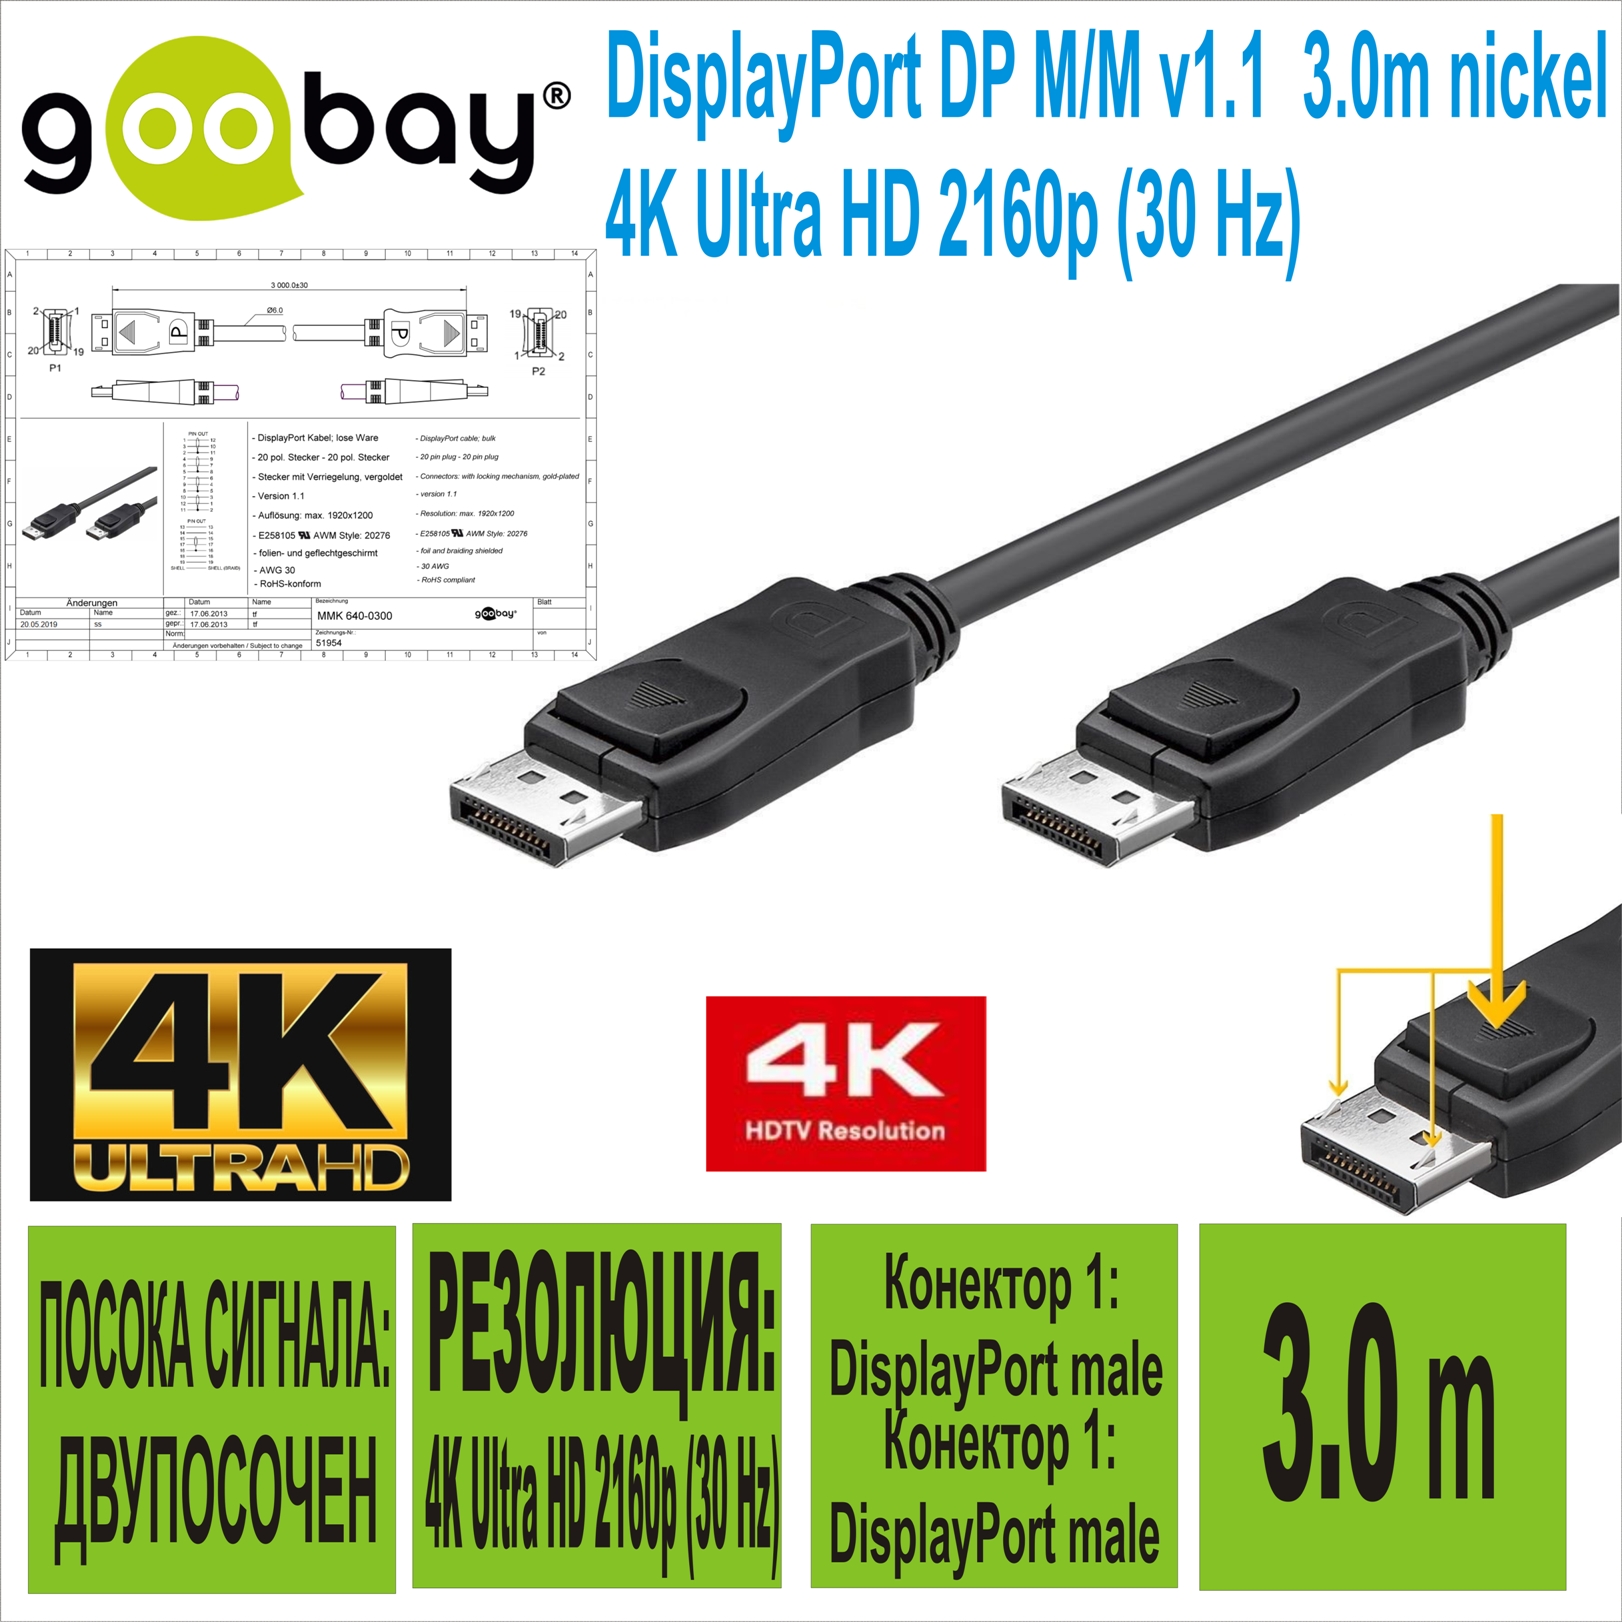 DisplayPort DP M/M v1.1  3.0m nickel GOOBAY